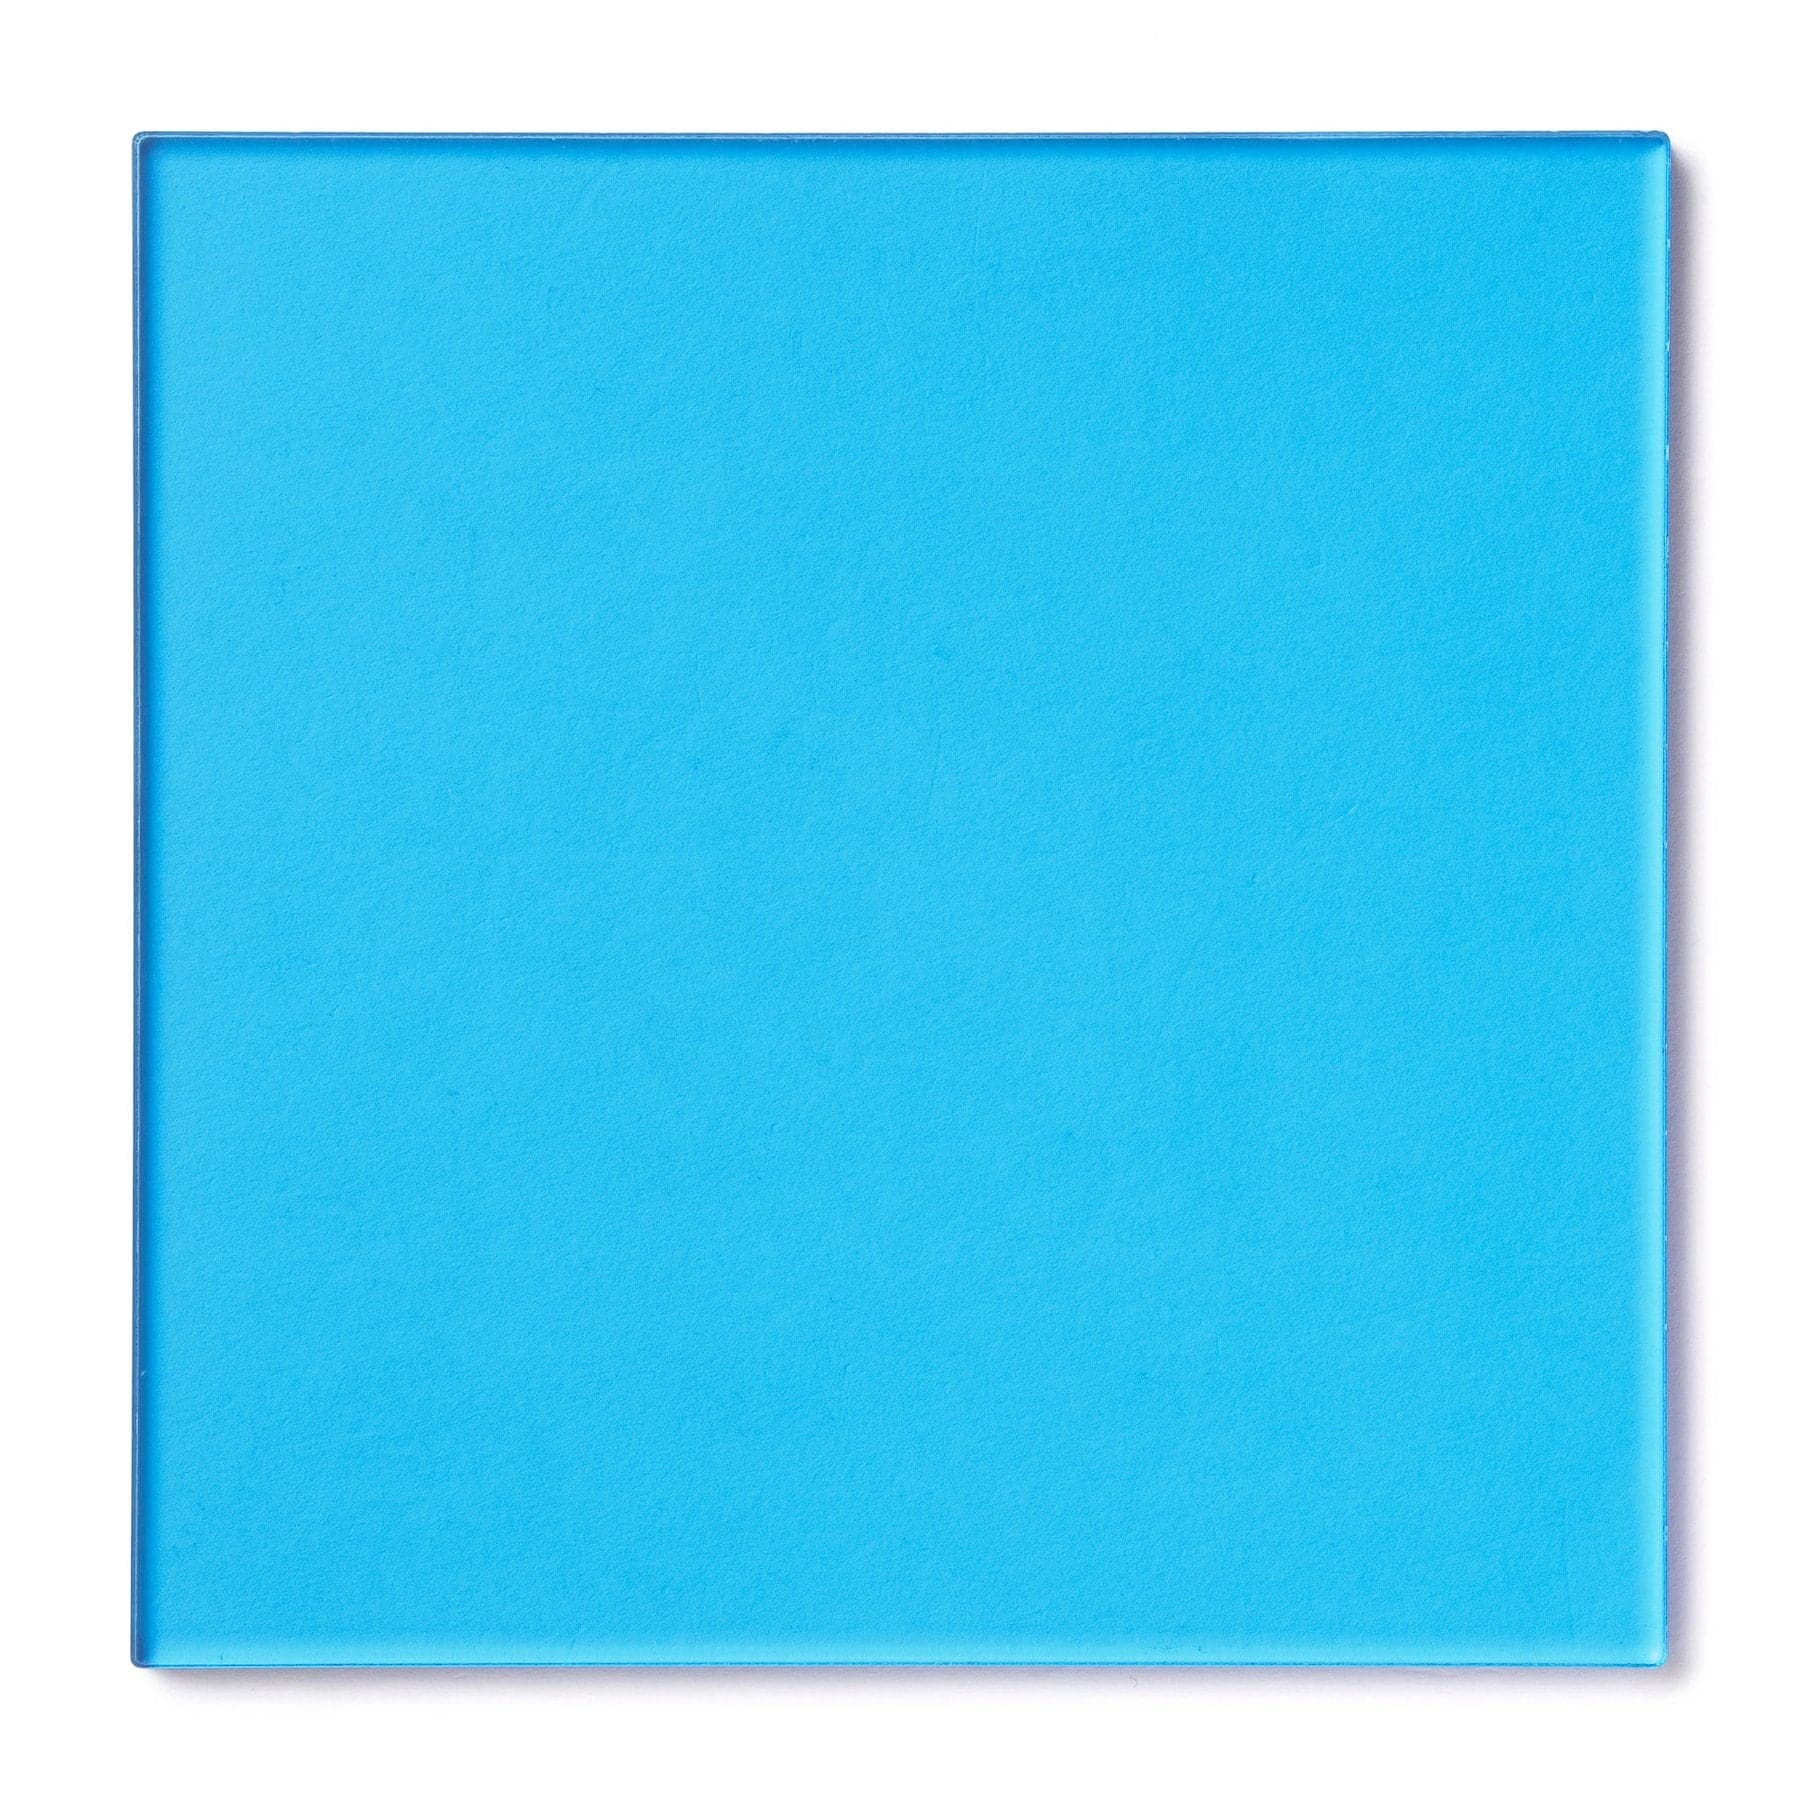 Acrylic Sheet 1/8" Light Blue Transparent #2069